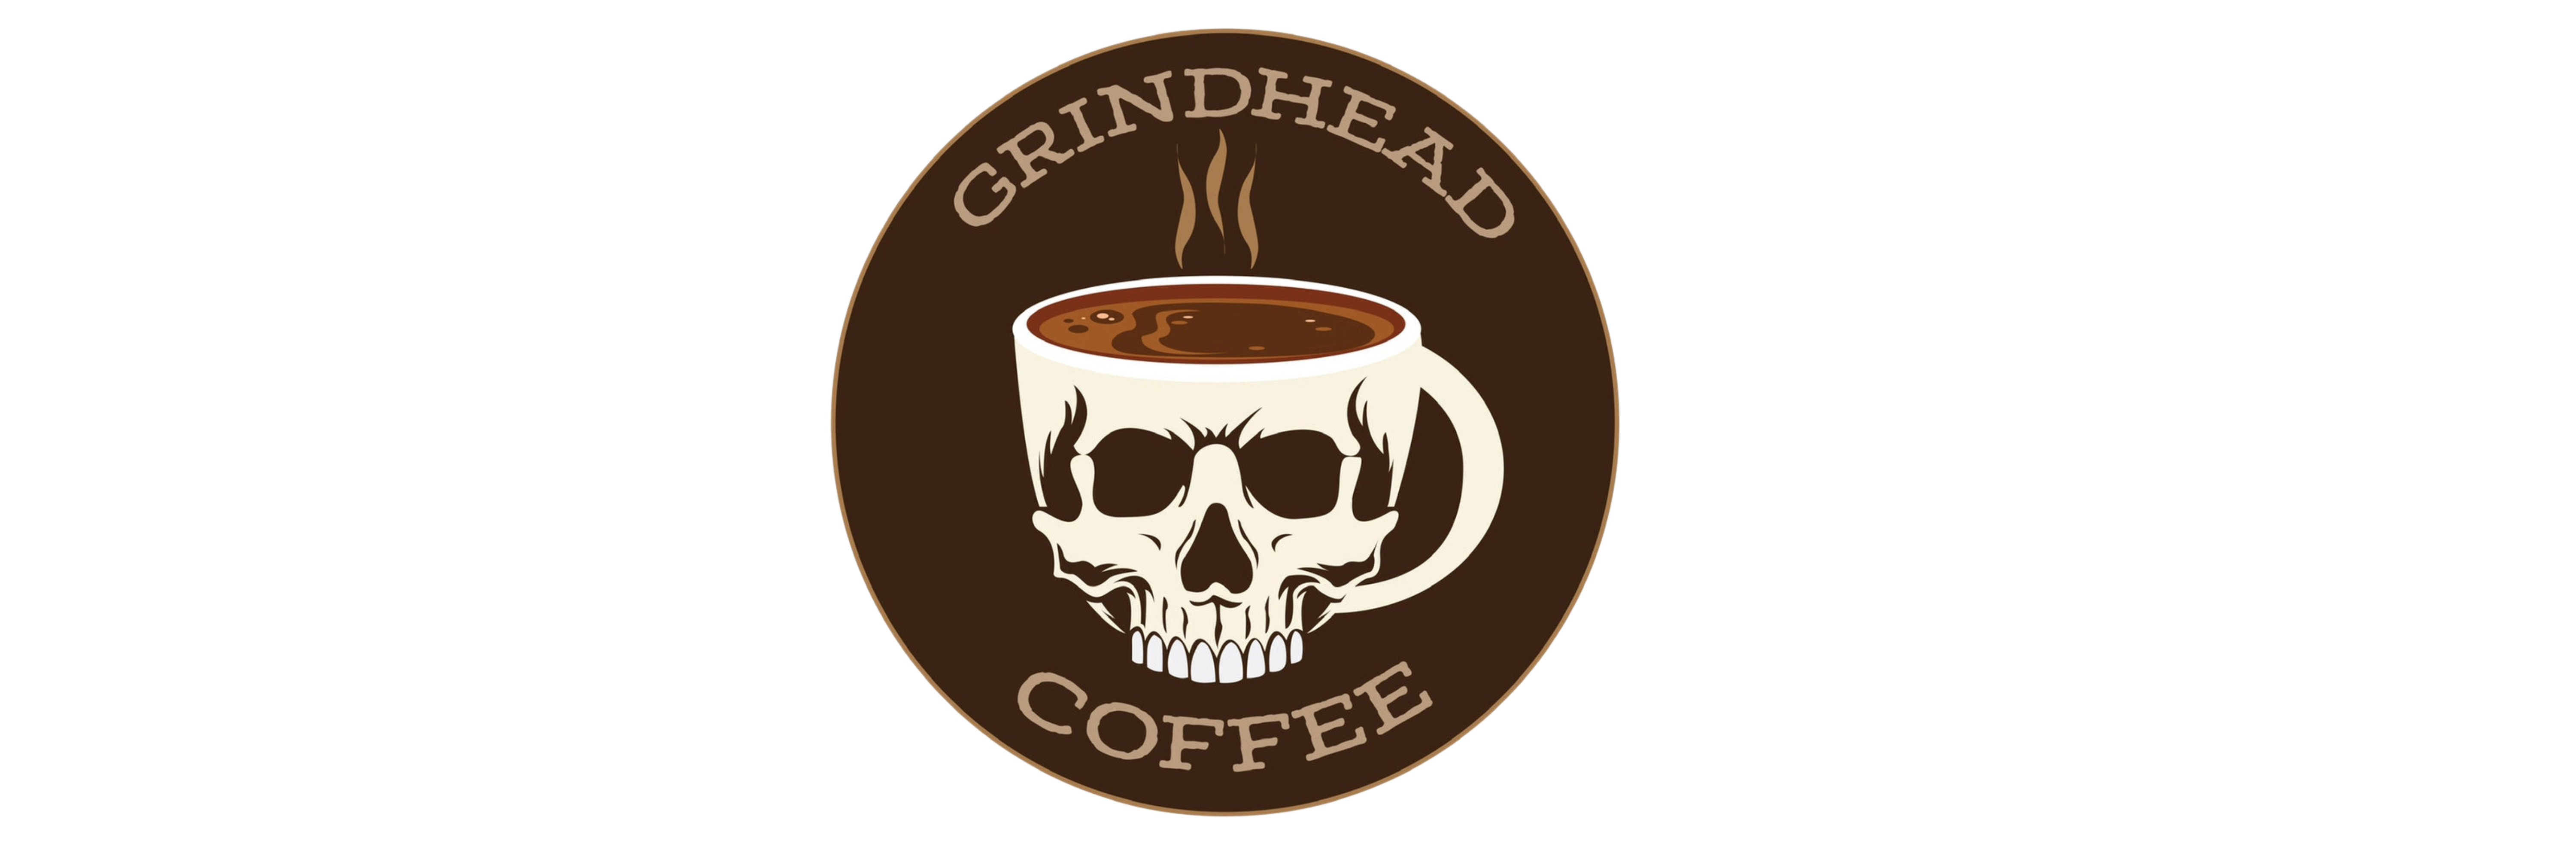 Grindhead Coffee